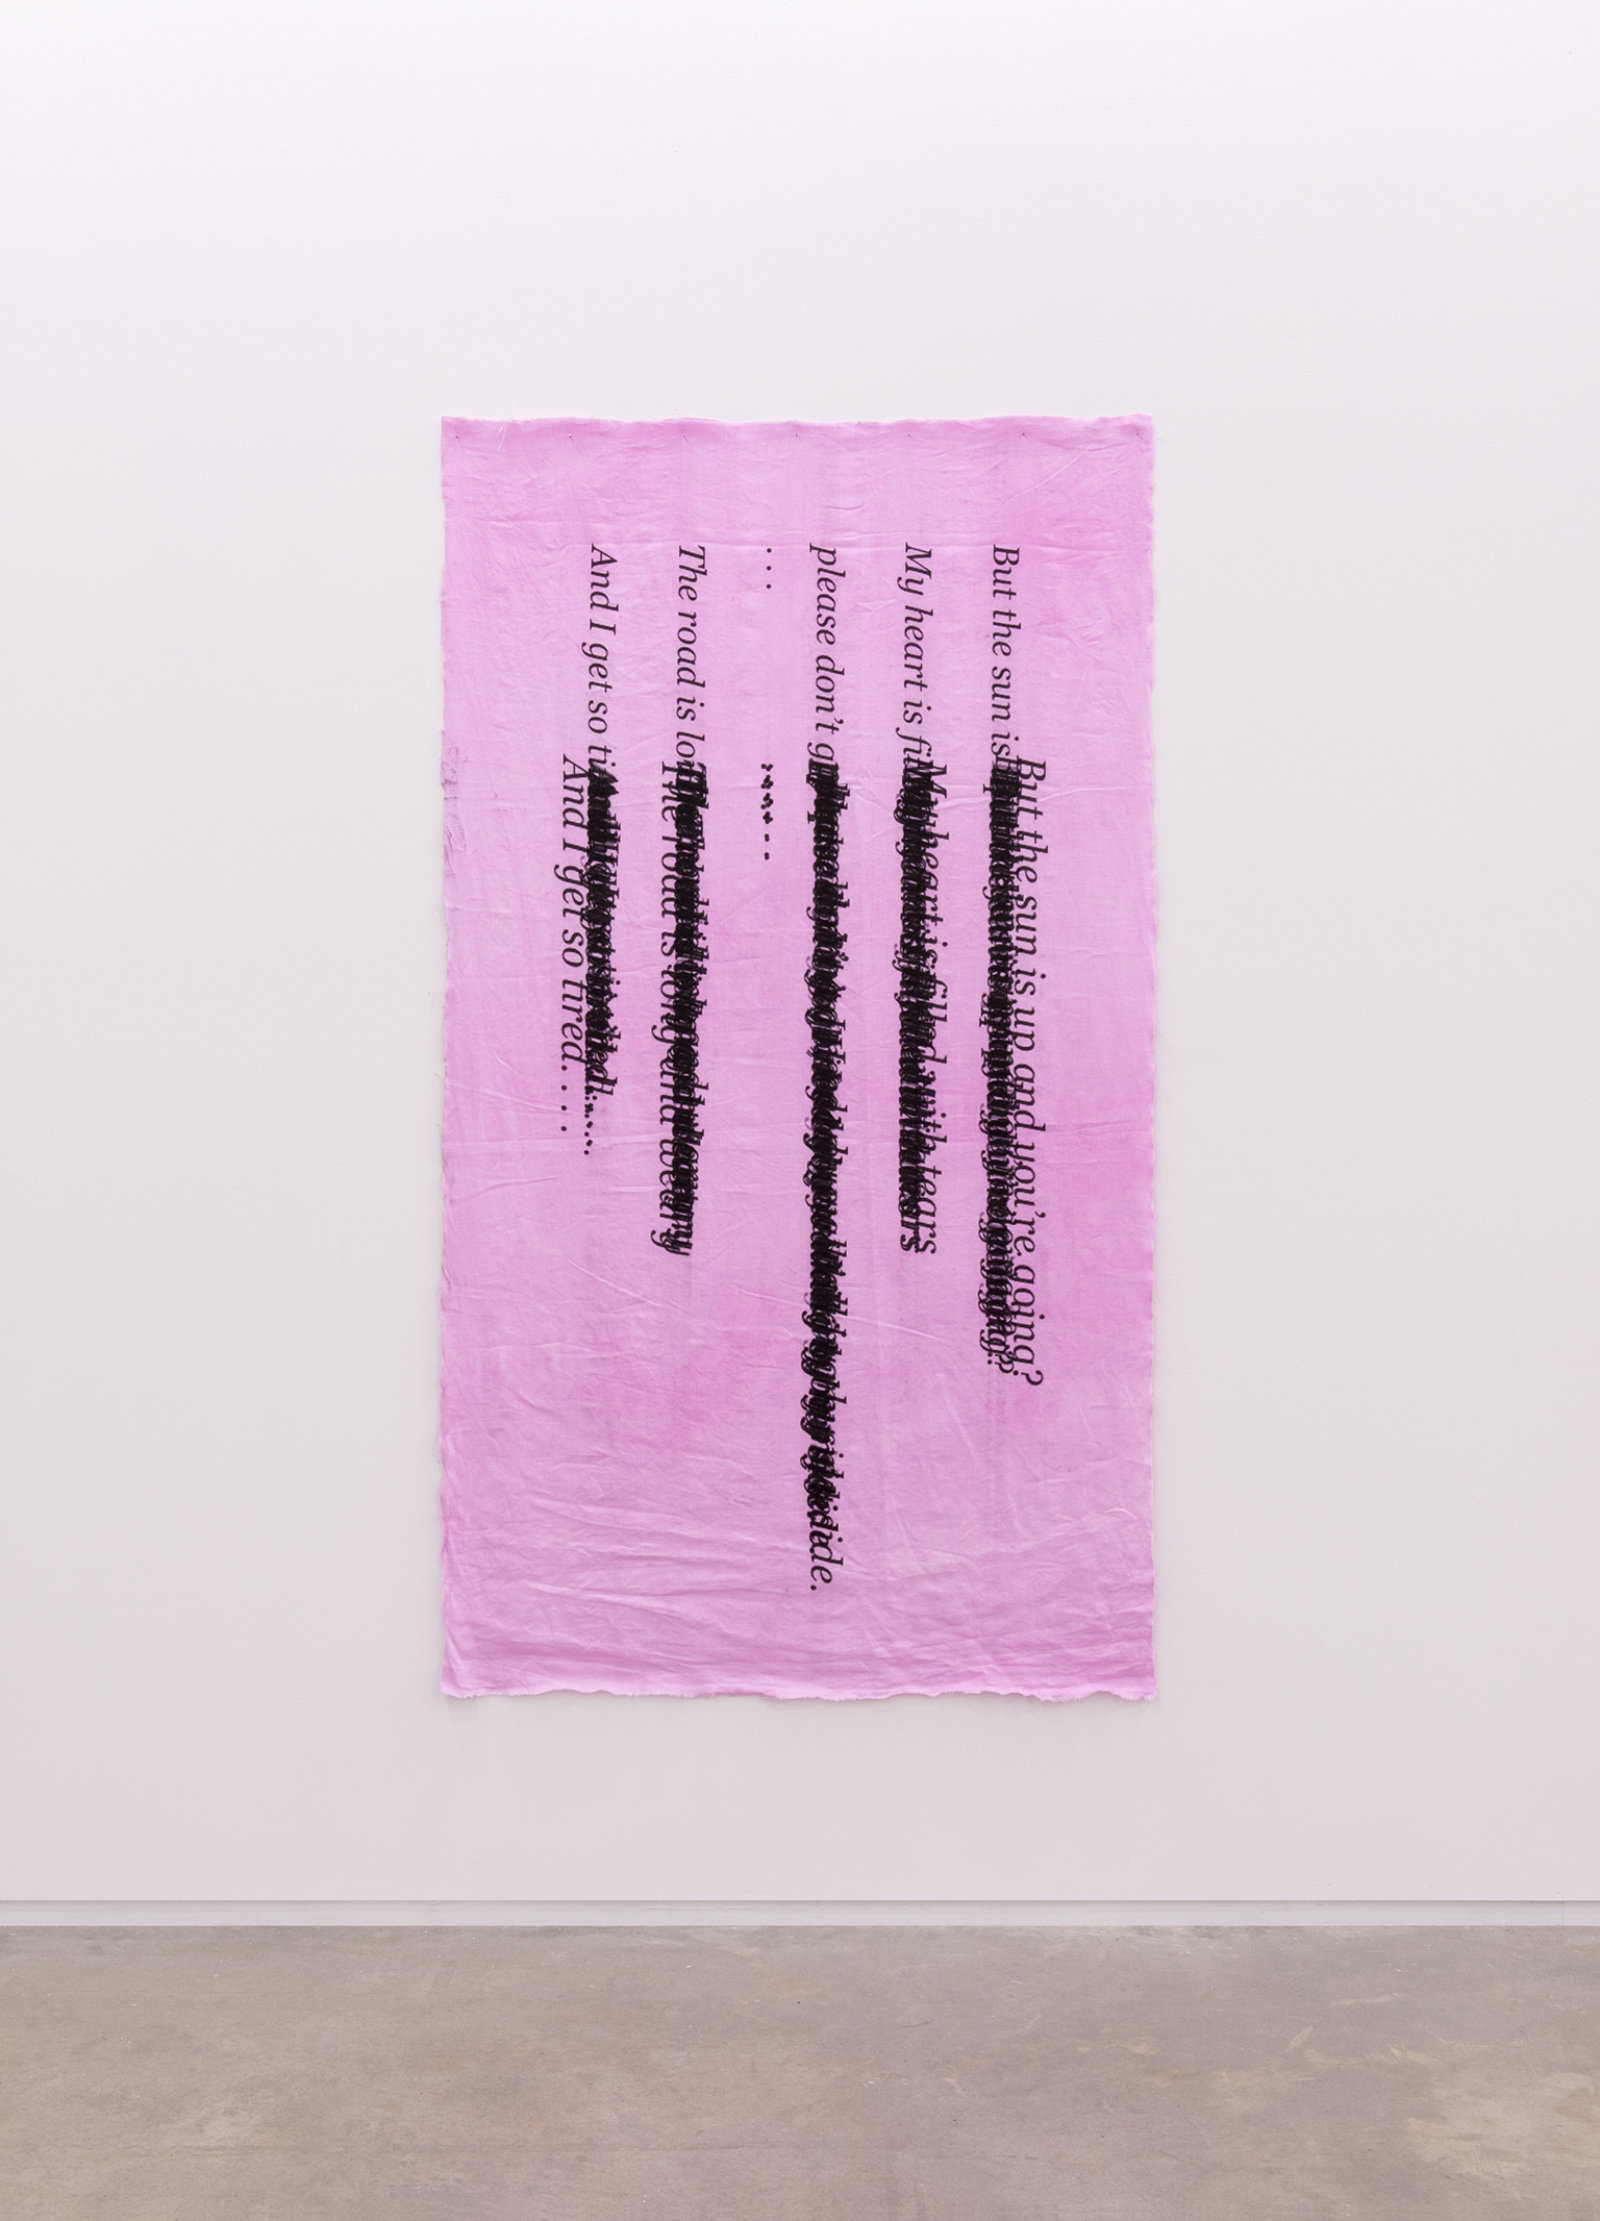 Duane Linklater, Ellipses, 2014, inkjet print on hand dyed linen, nails, 79 x 4 in. (200 x 110 cm)